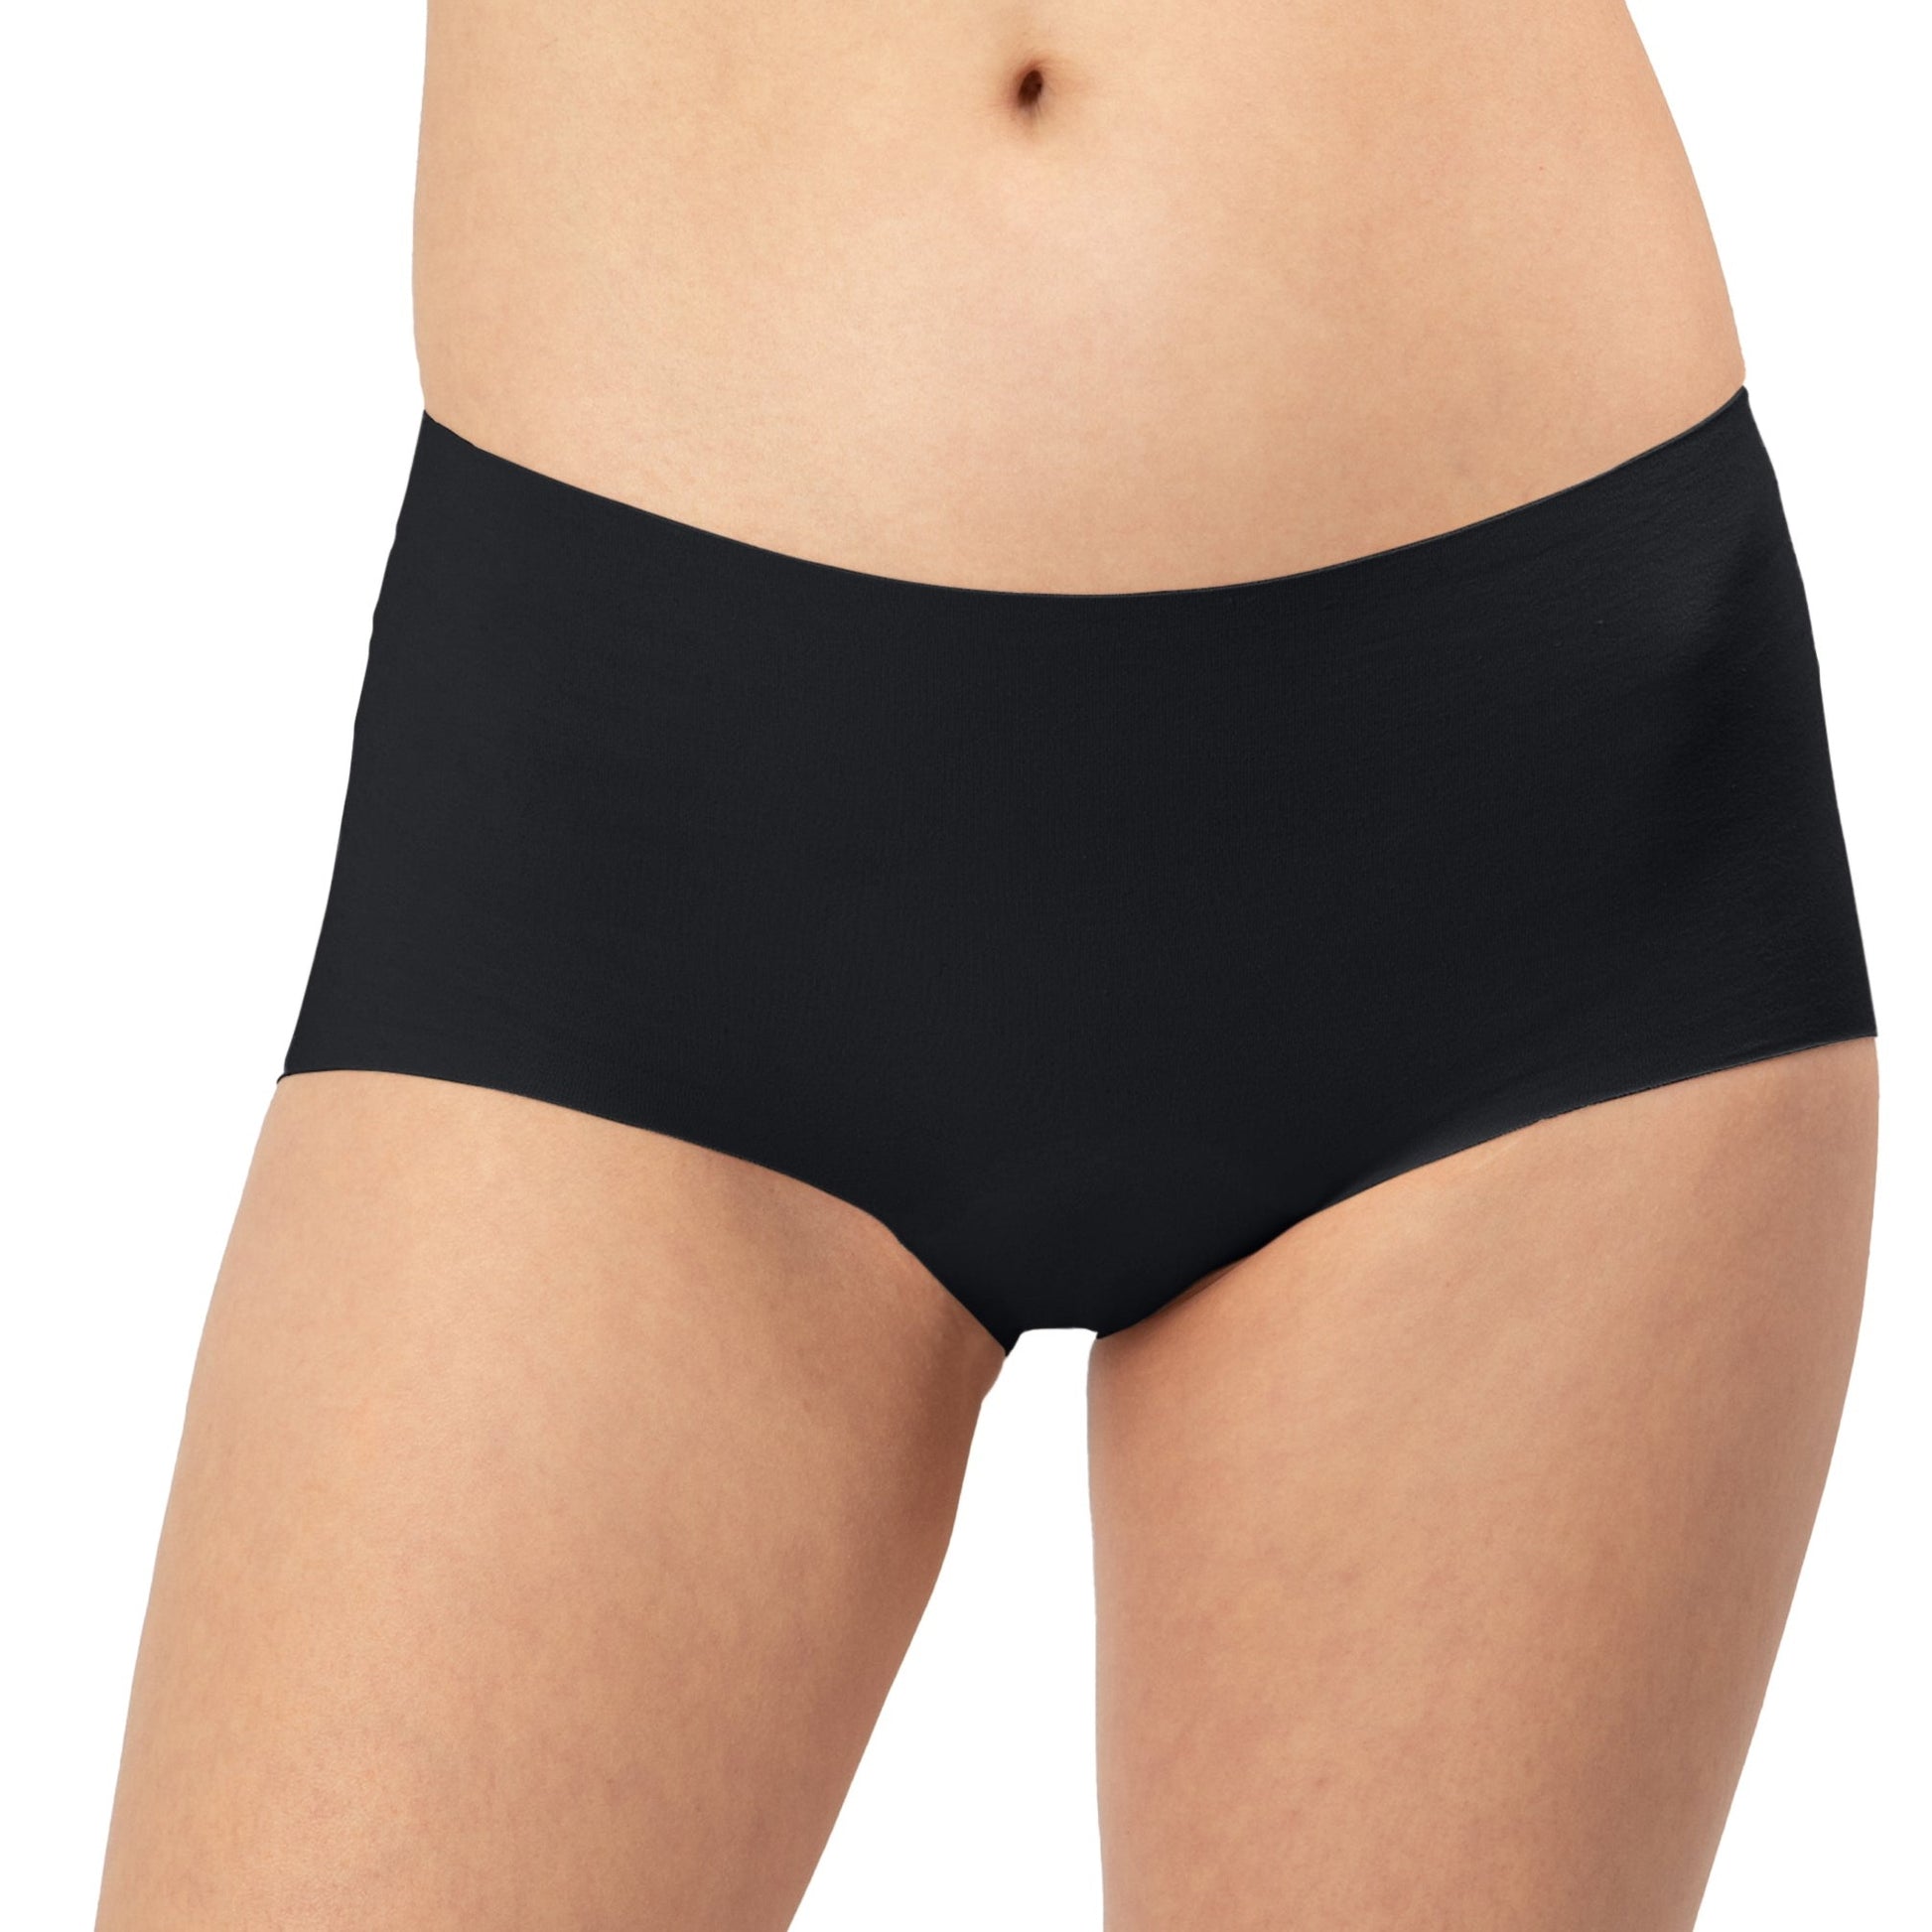 Modern Brief - Black, Pale, Tan Bras & Lingerie - Underwear - Brief PANTY PROMISE BLACK XS 